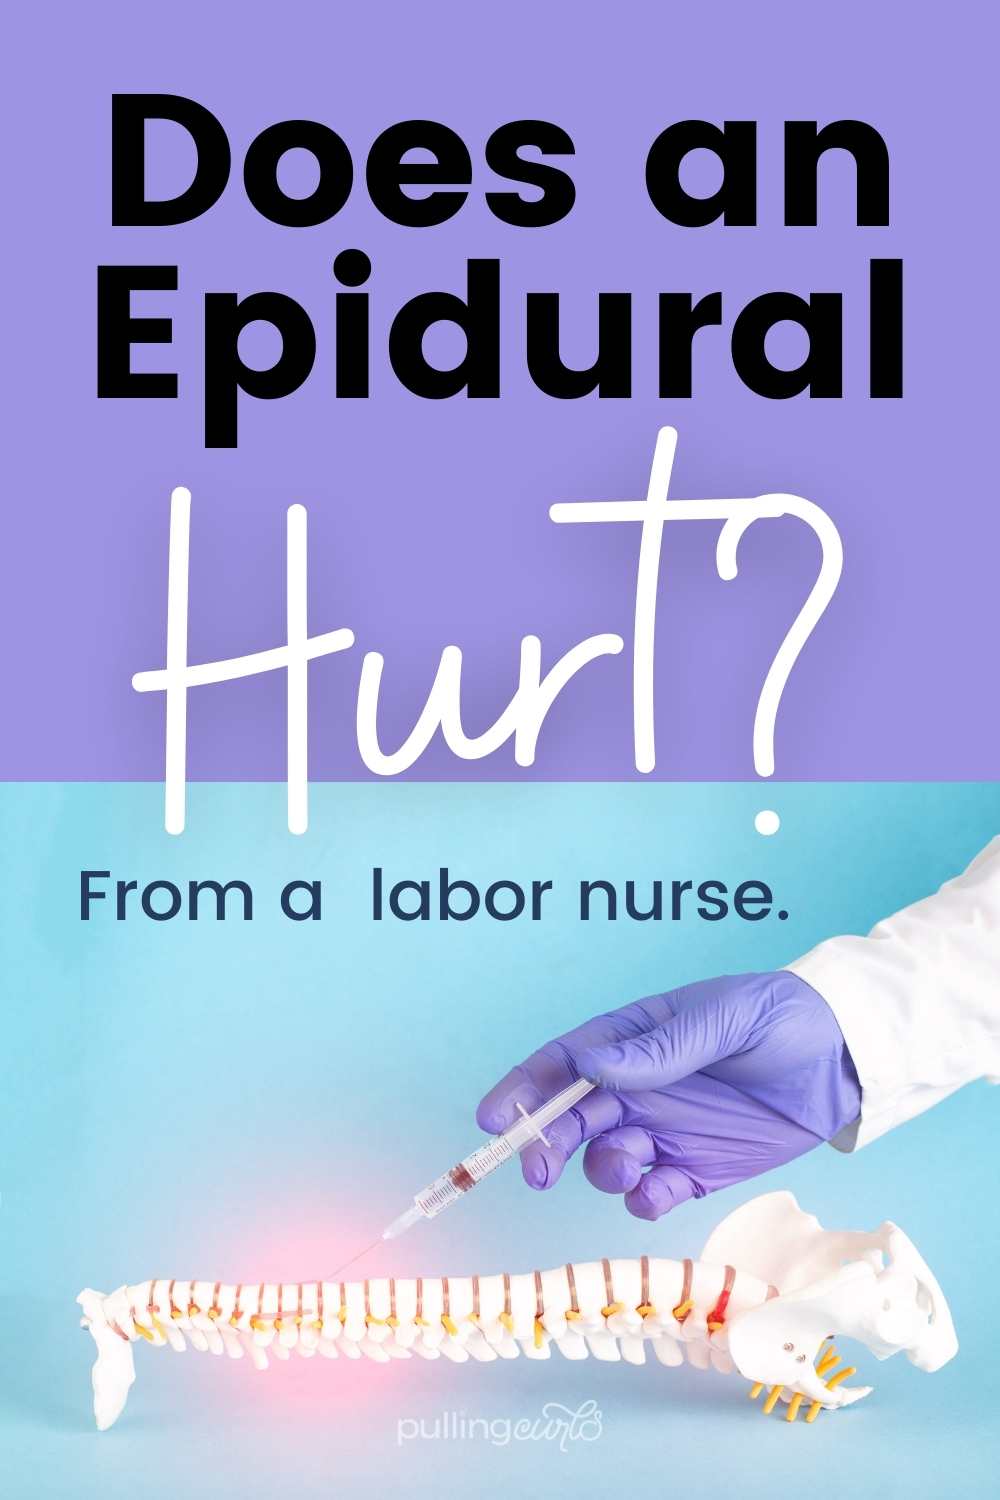 What does it feel like tog et an epidural? via @pullingcurls